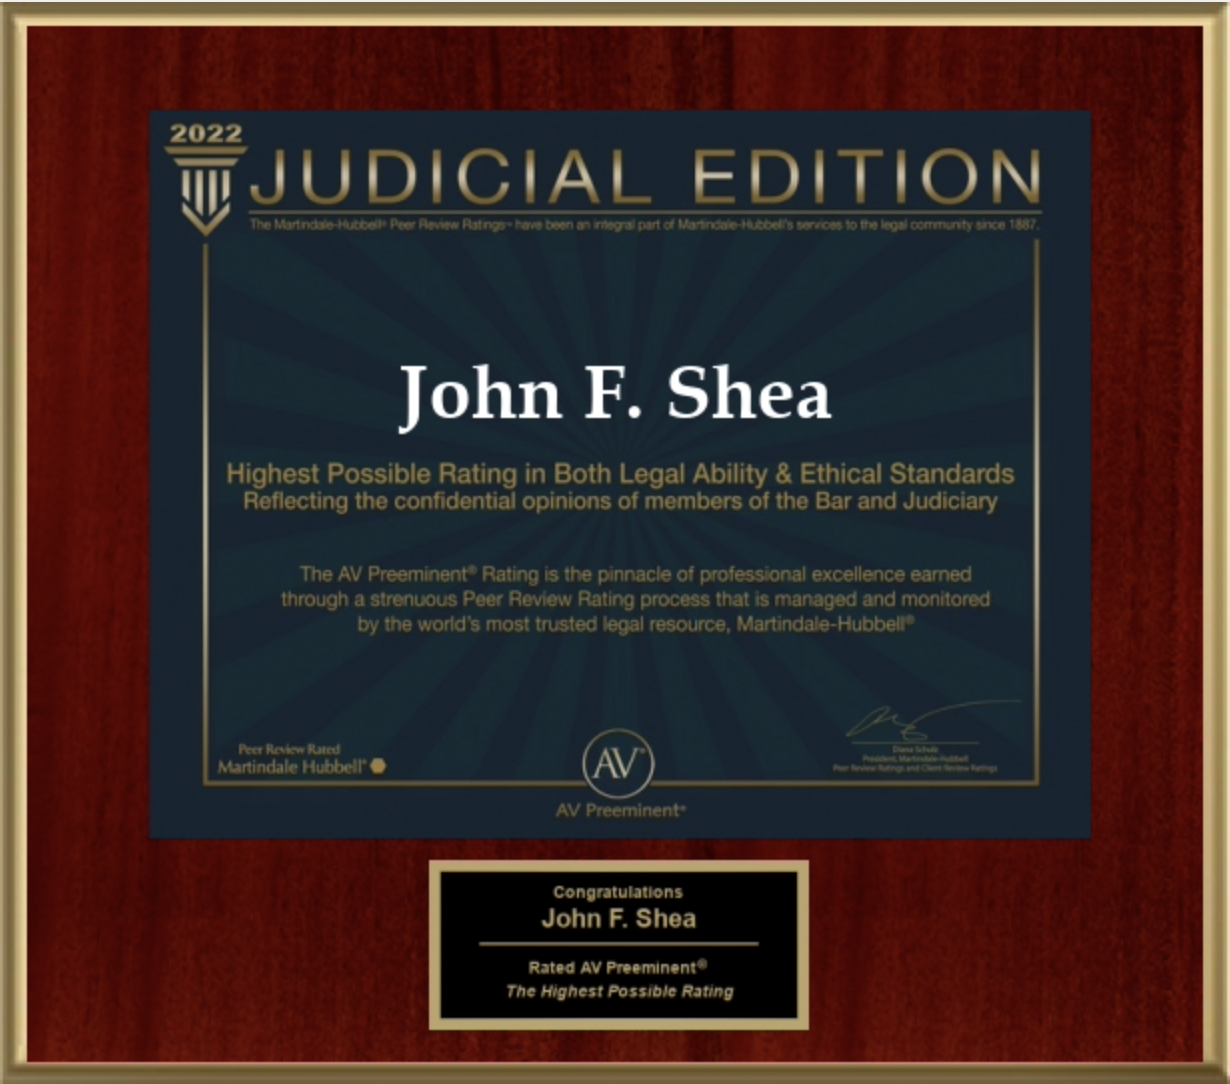 2022 Judicial Edition